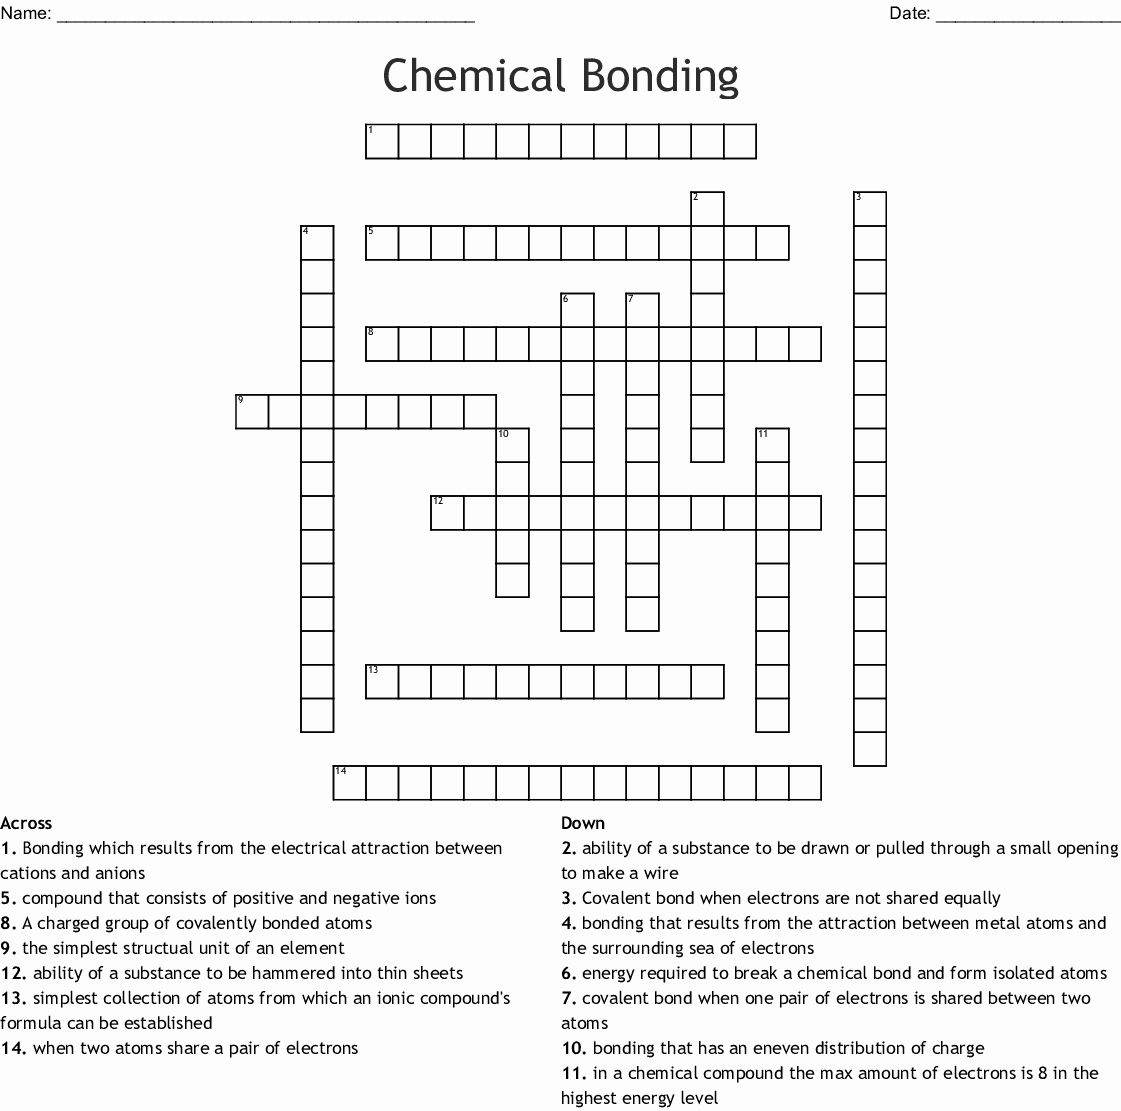 Chemical Bonding Worksheet Answers Unique Chemical Bonding Worksheet Answers Review